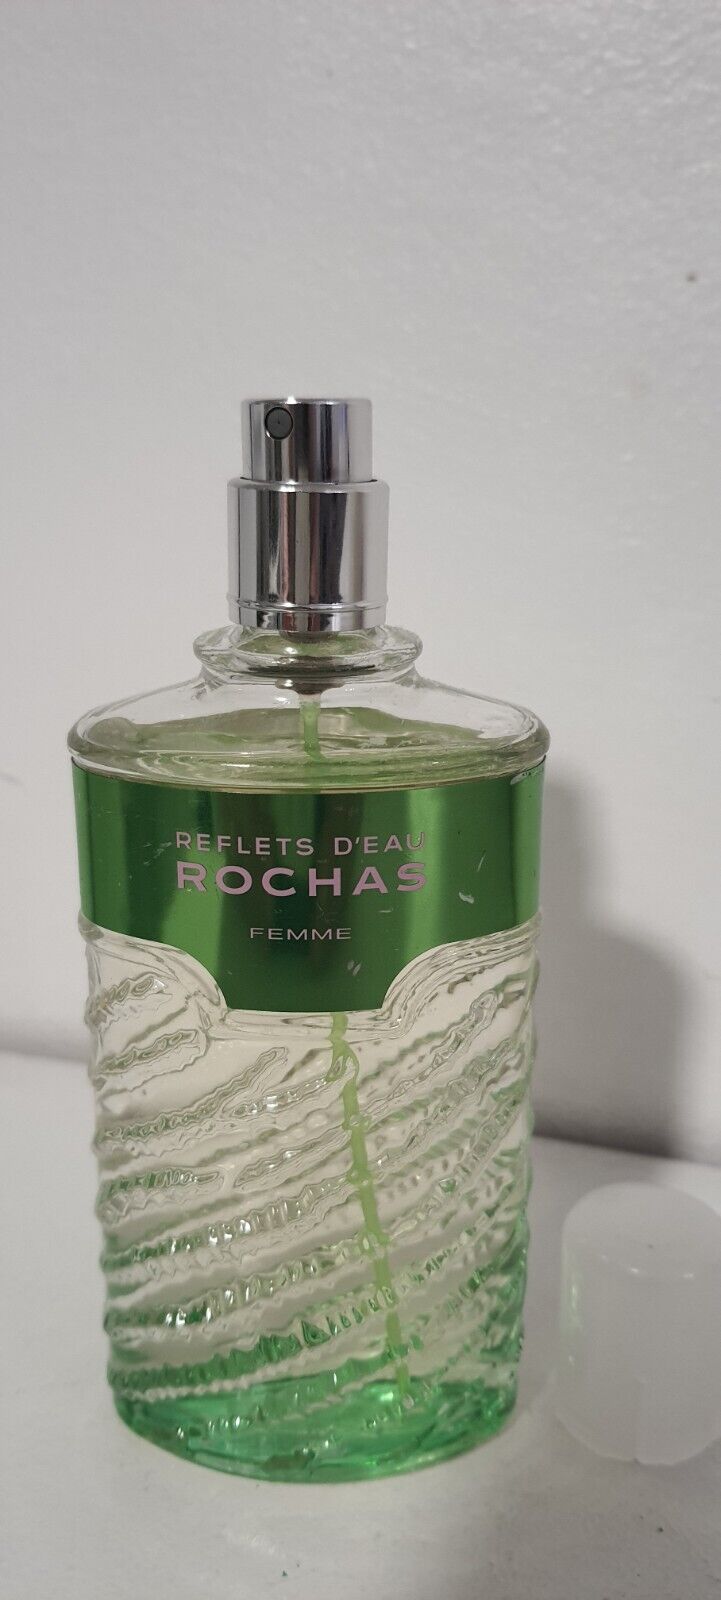 Perfume men's reflection of Rochas new